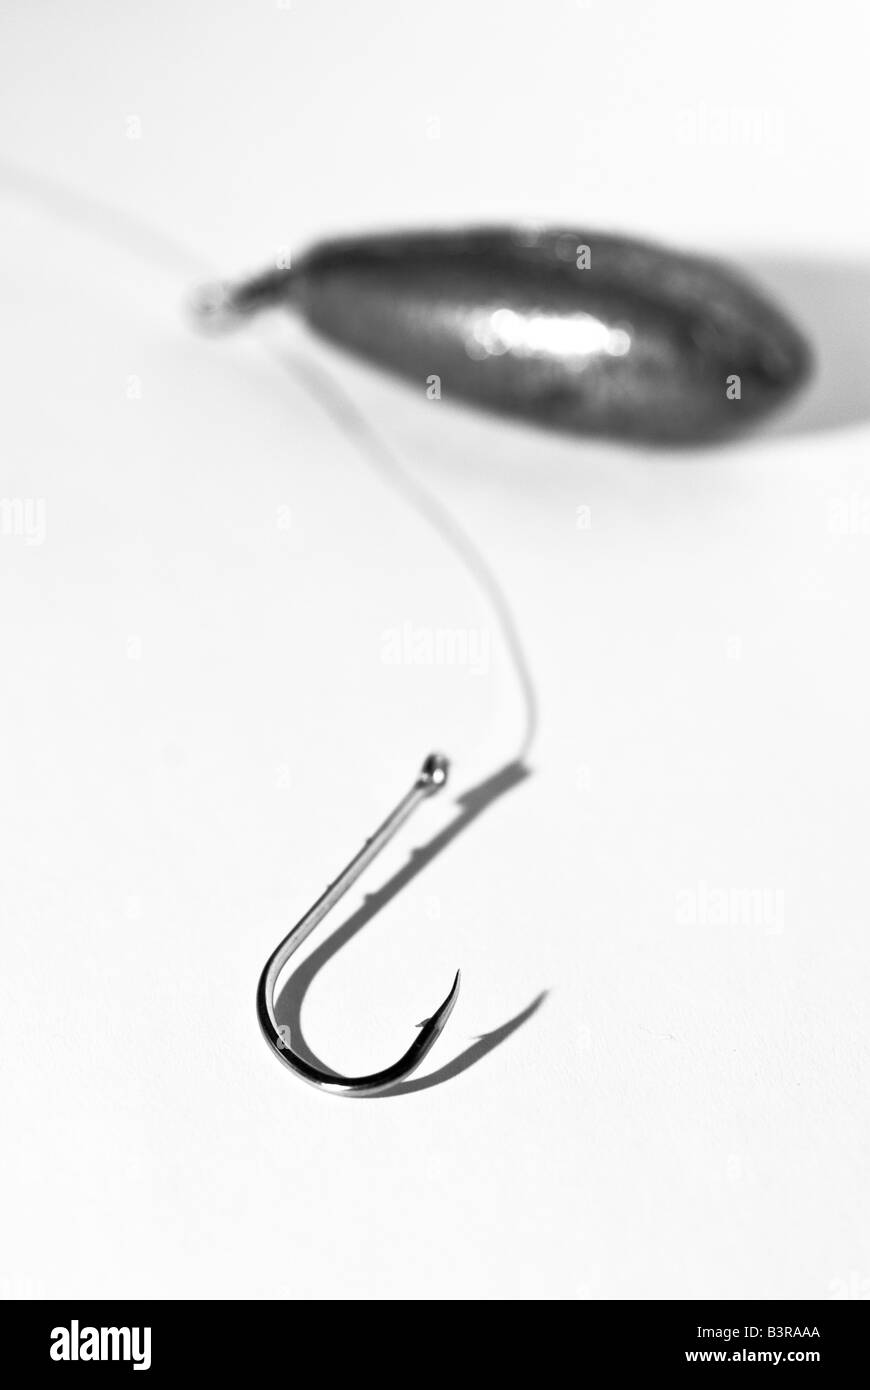 Fishing hook, line and sinker Stock Photo - Alamy